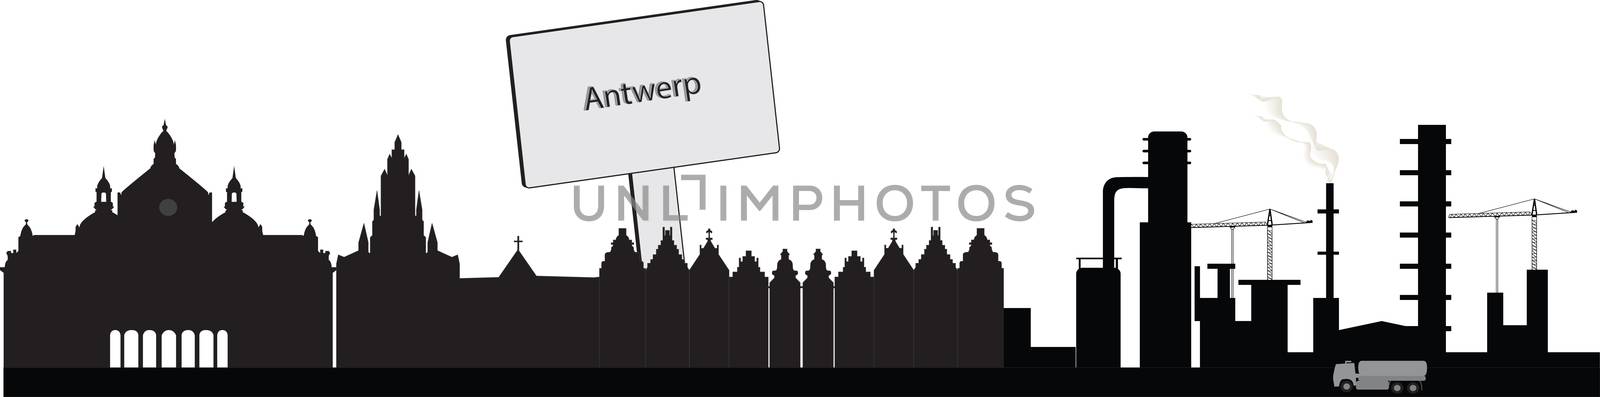 Antwerp belgium skyline by compuinfoto